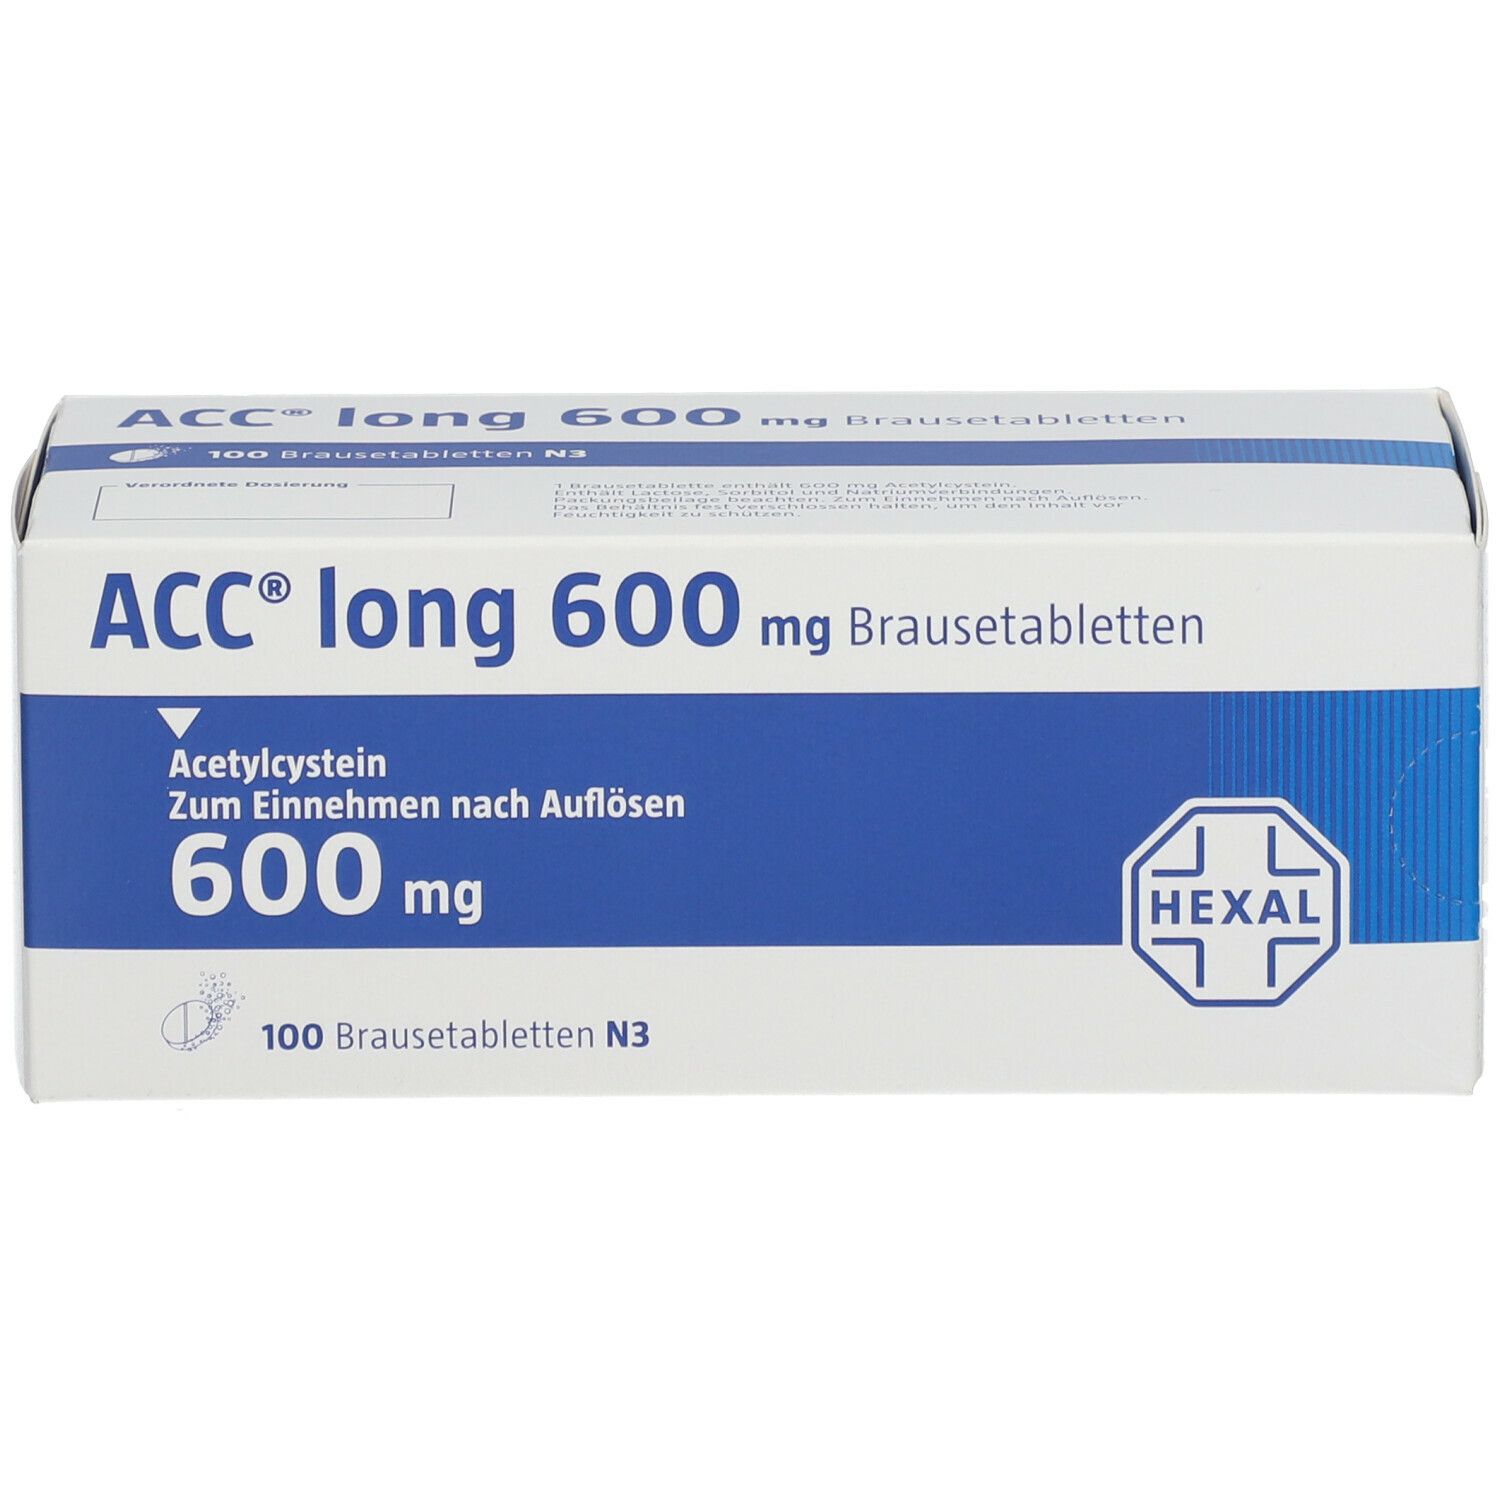 ACC® long 600 mg